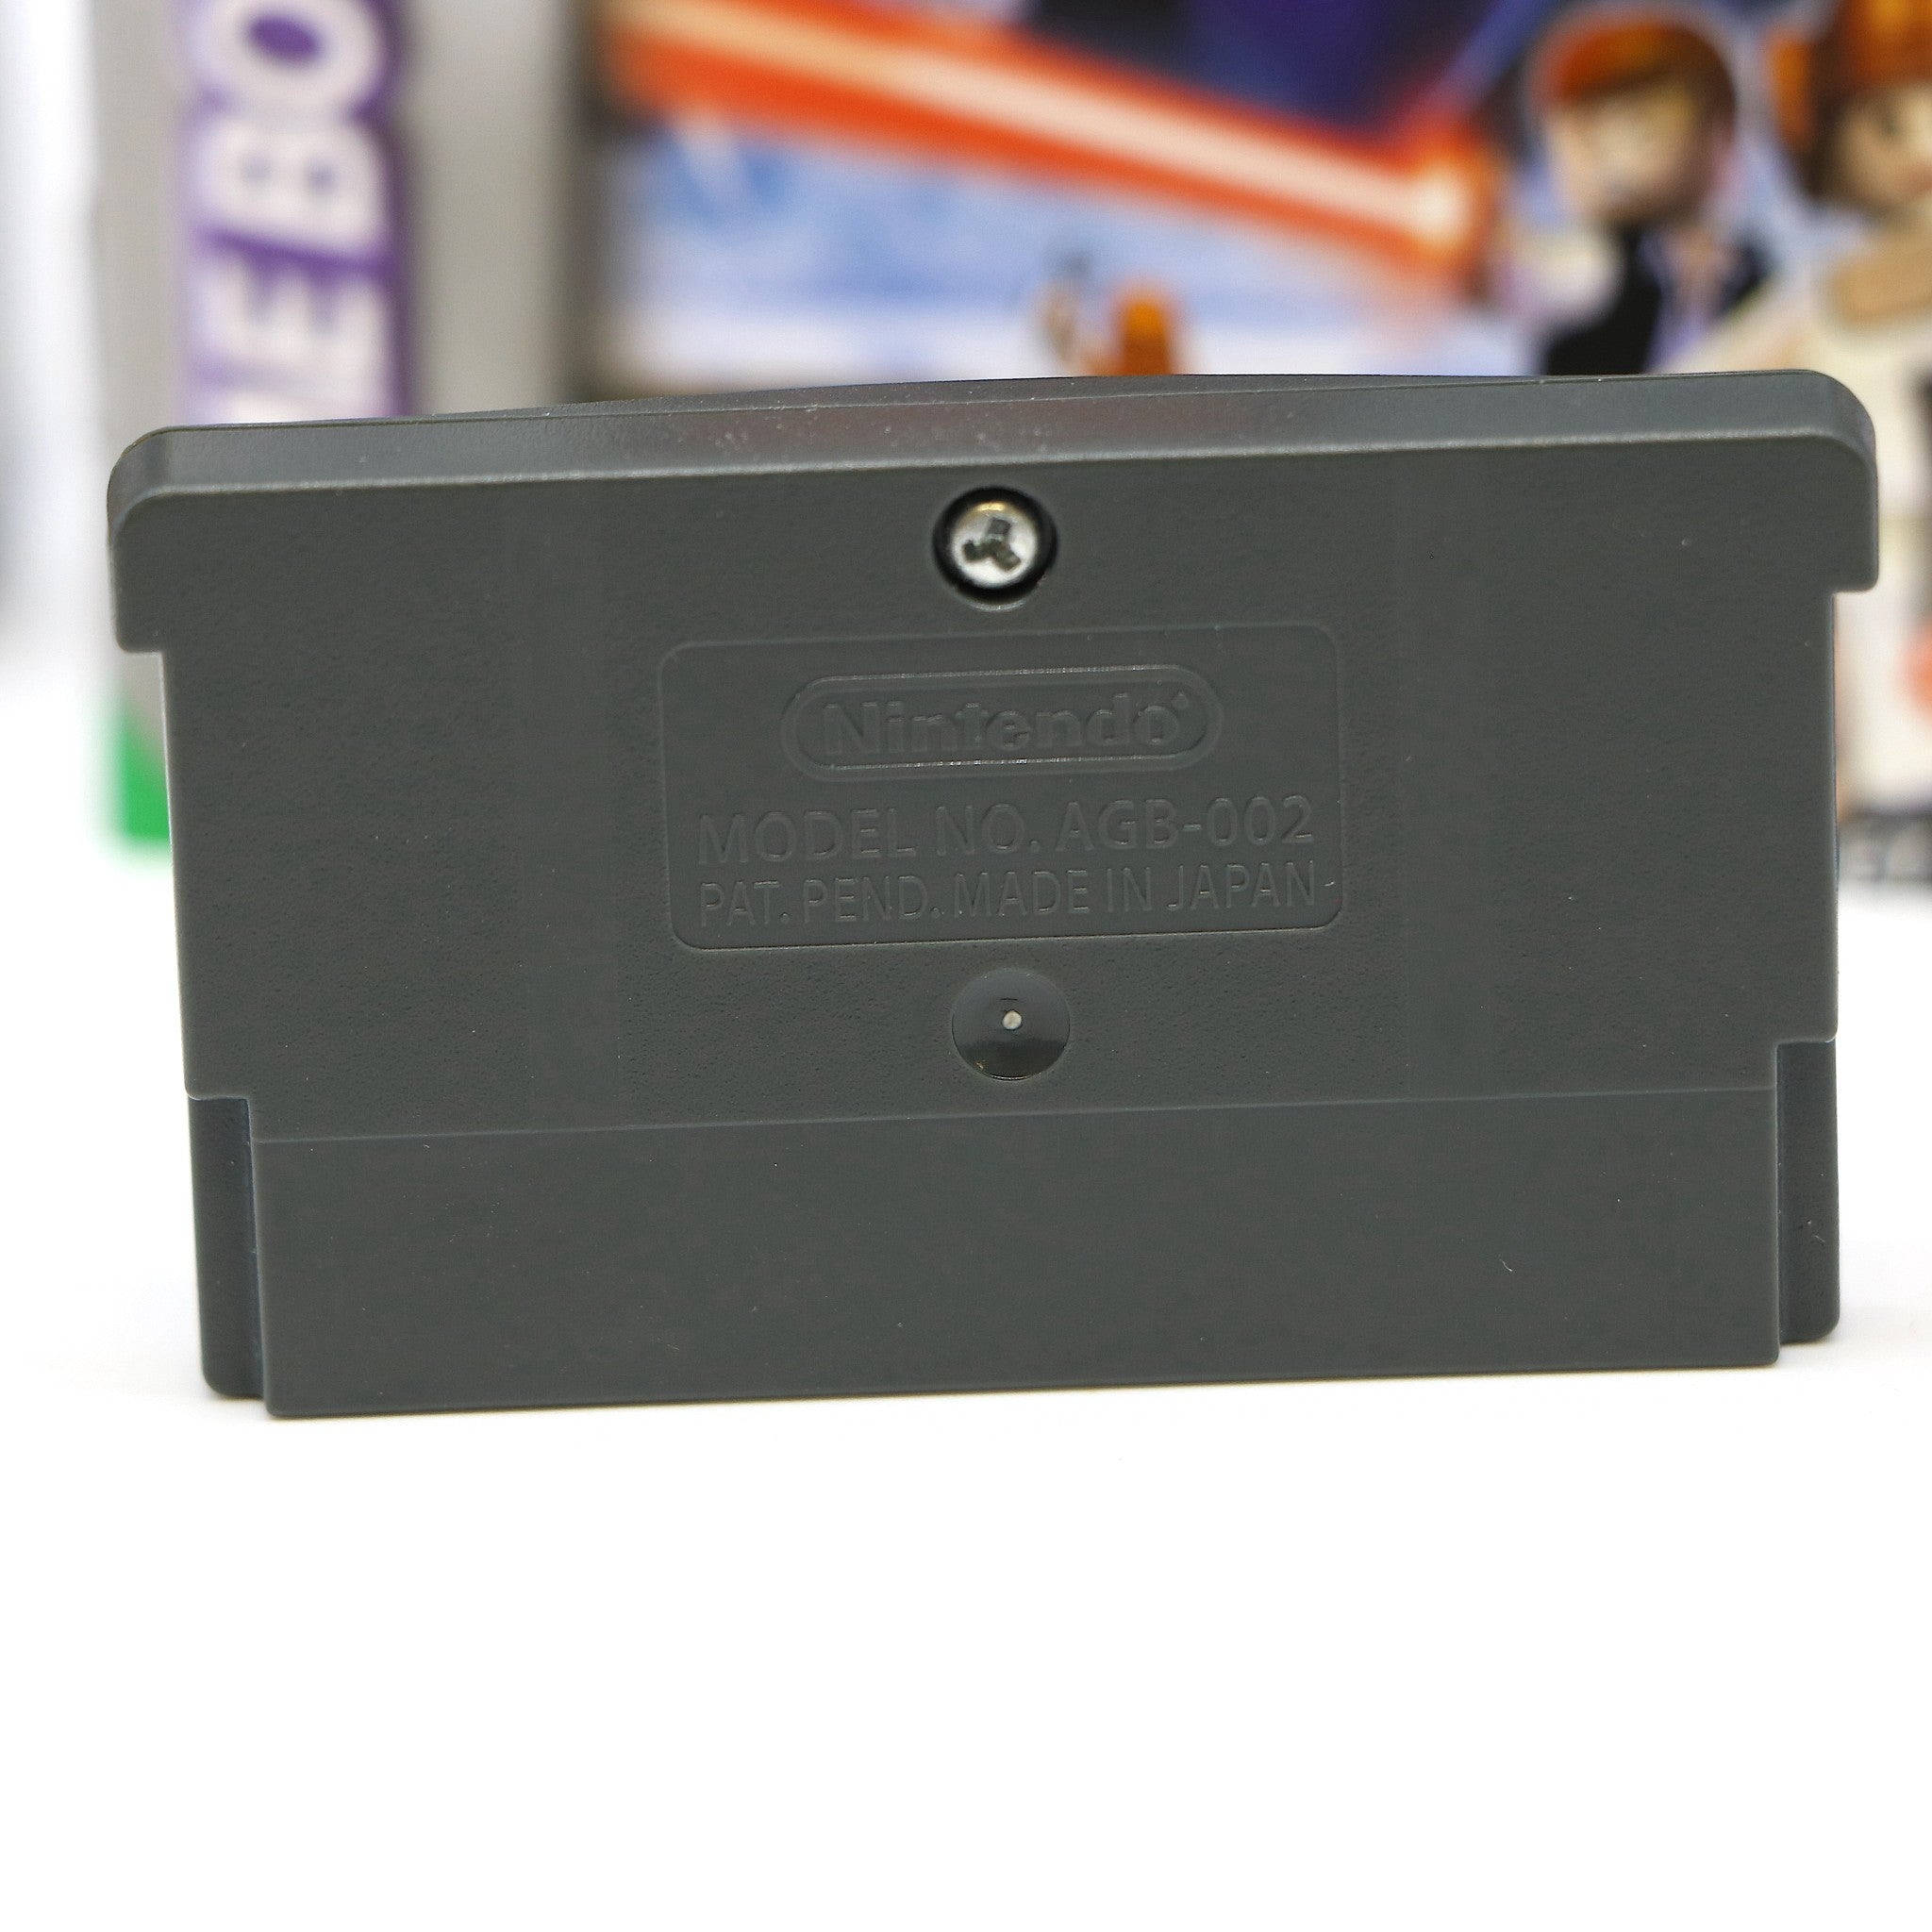 Lego Star Wars II (2) The Original Trilogy | Nintendo Game Boy Advance GBA Game